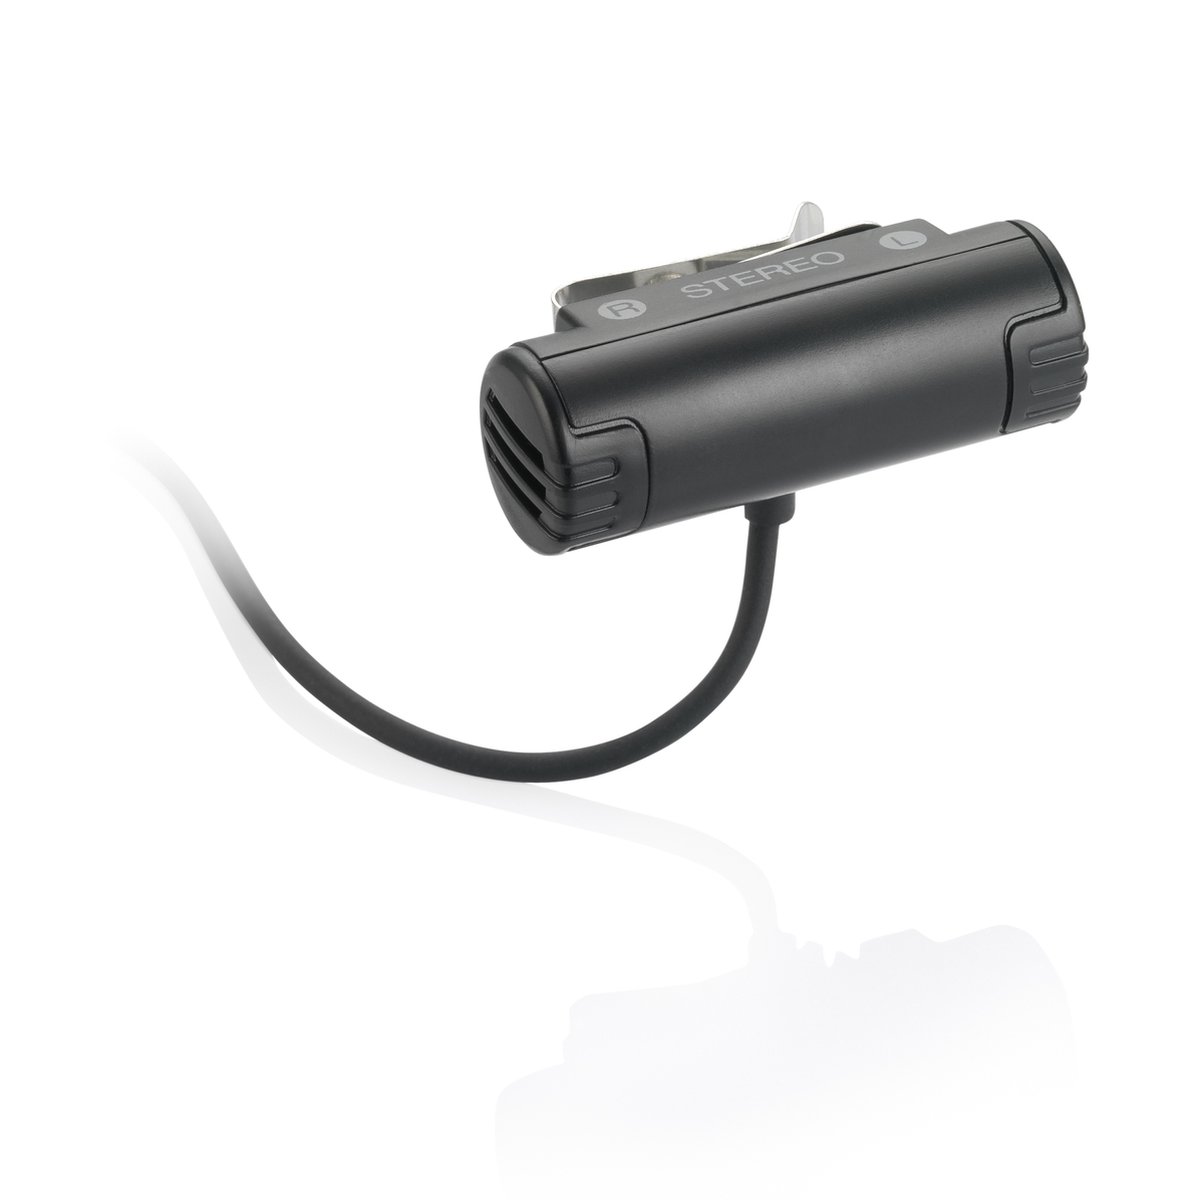 Stereo Dasspeld Microfoon DDL7510 - 3.5 mm Jack Plug connector - Clip microfoon - 1 Meter kabel - Zwart